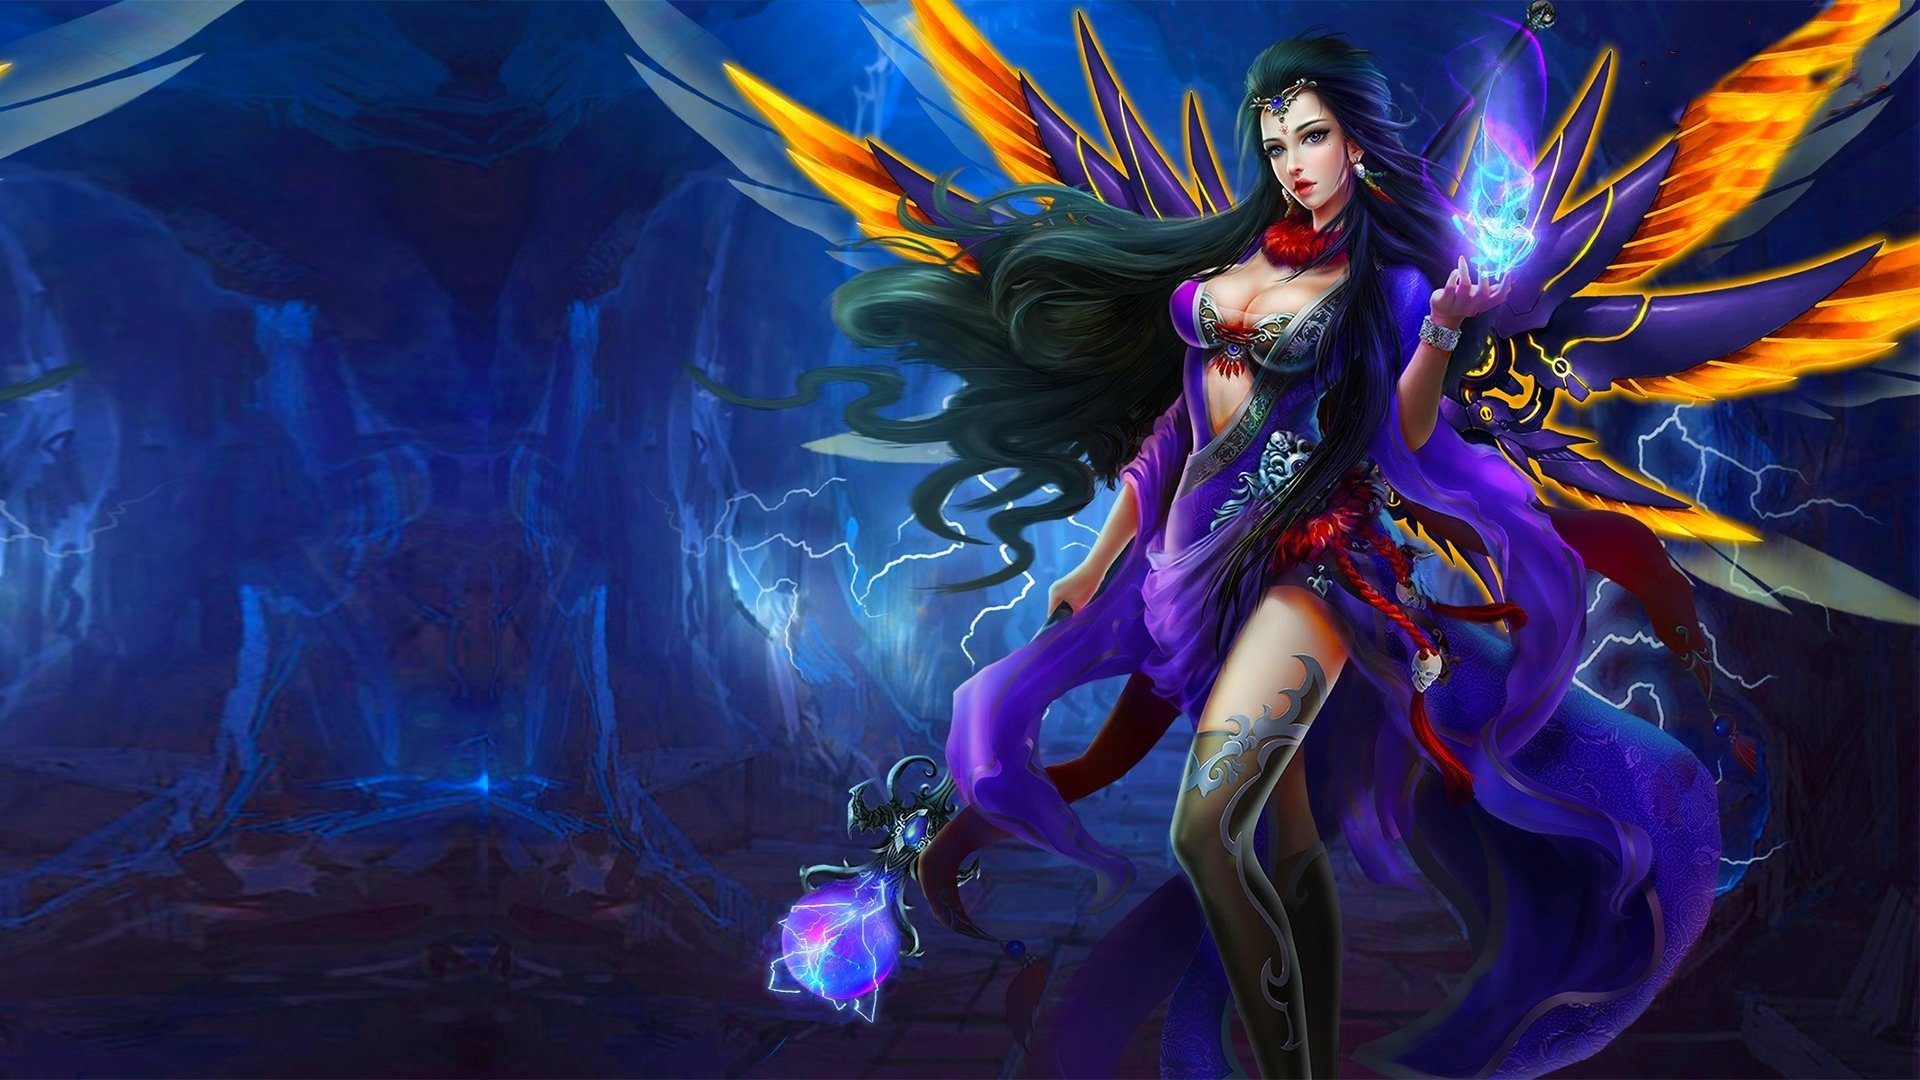 Purple Angel Girl with wings magic wand Fantasy art Wallpaper